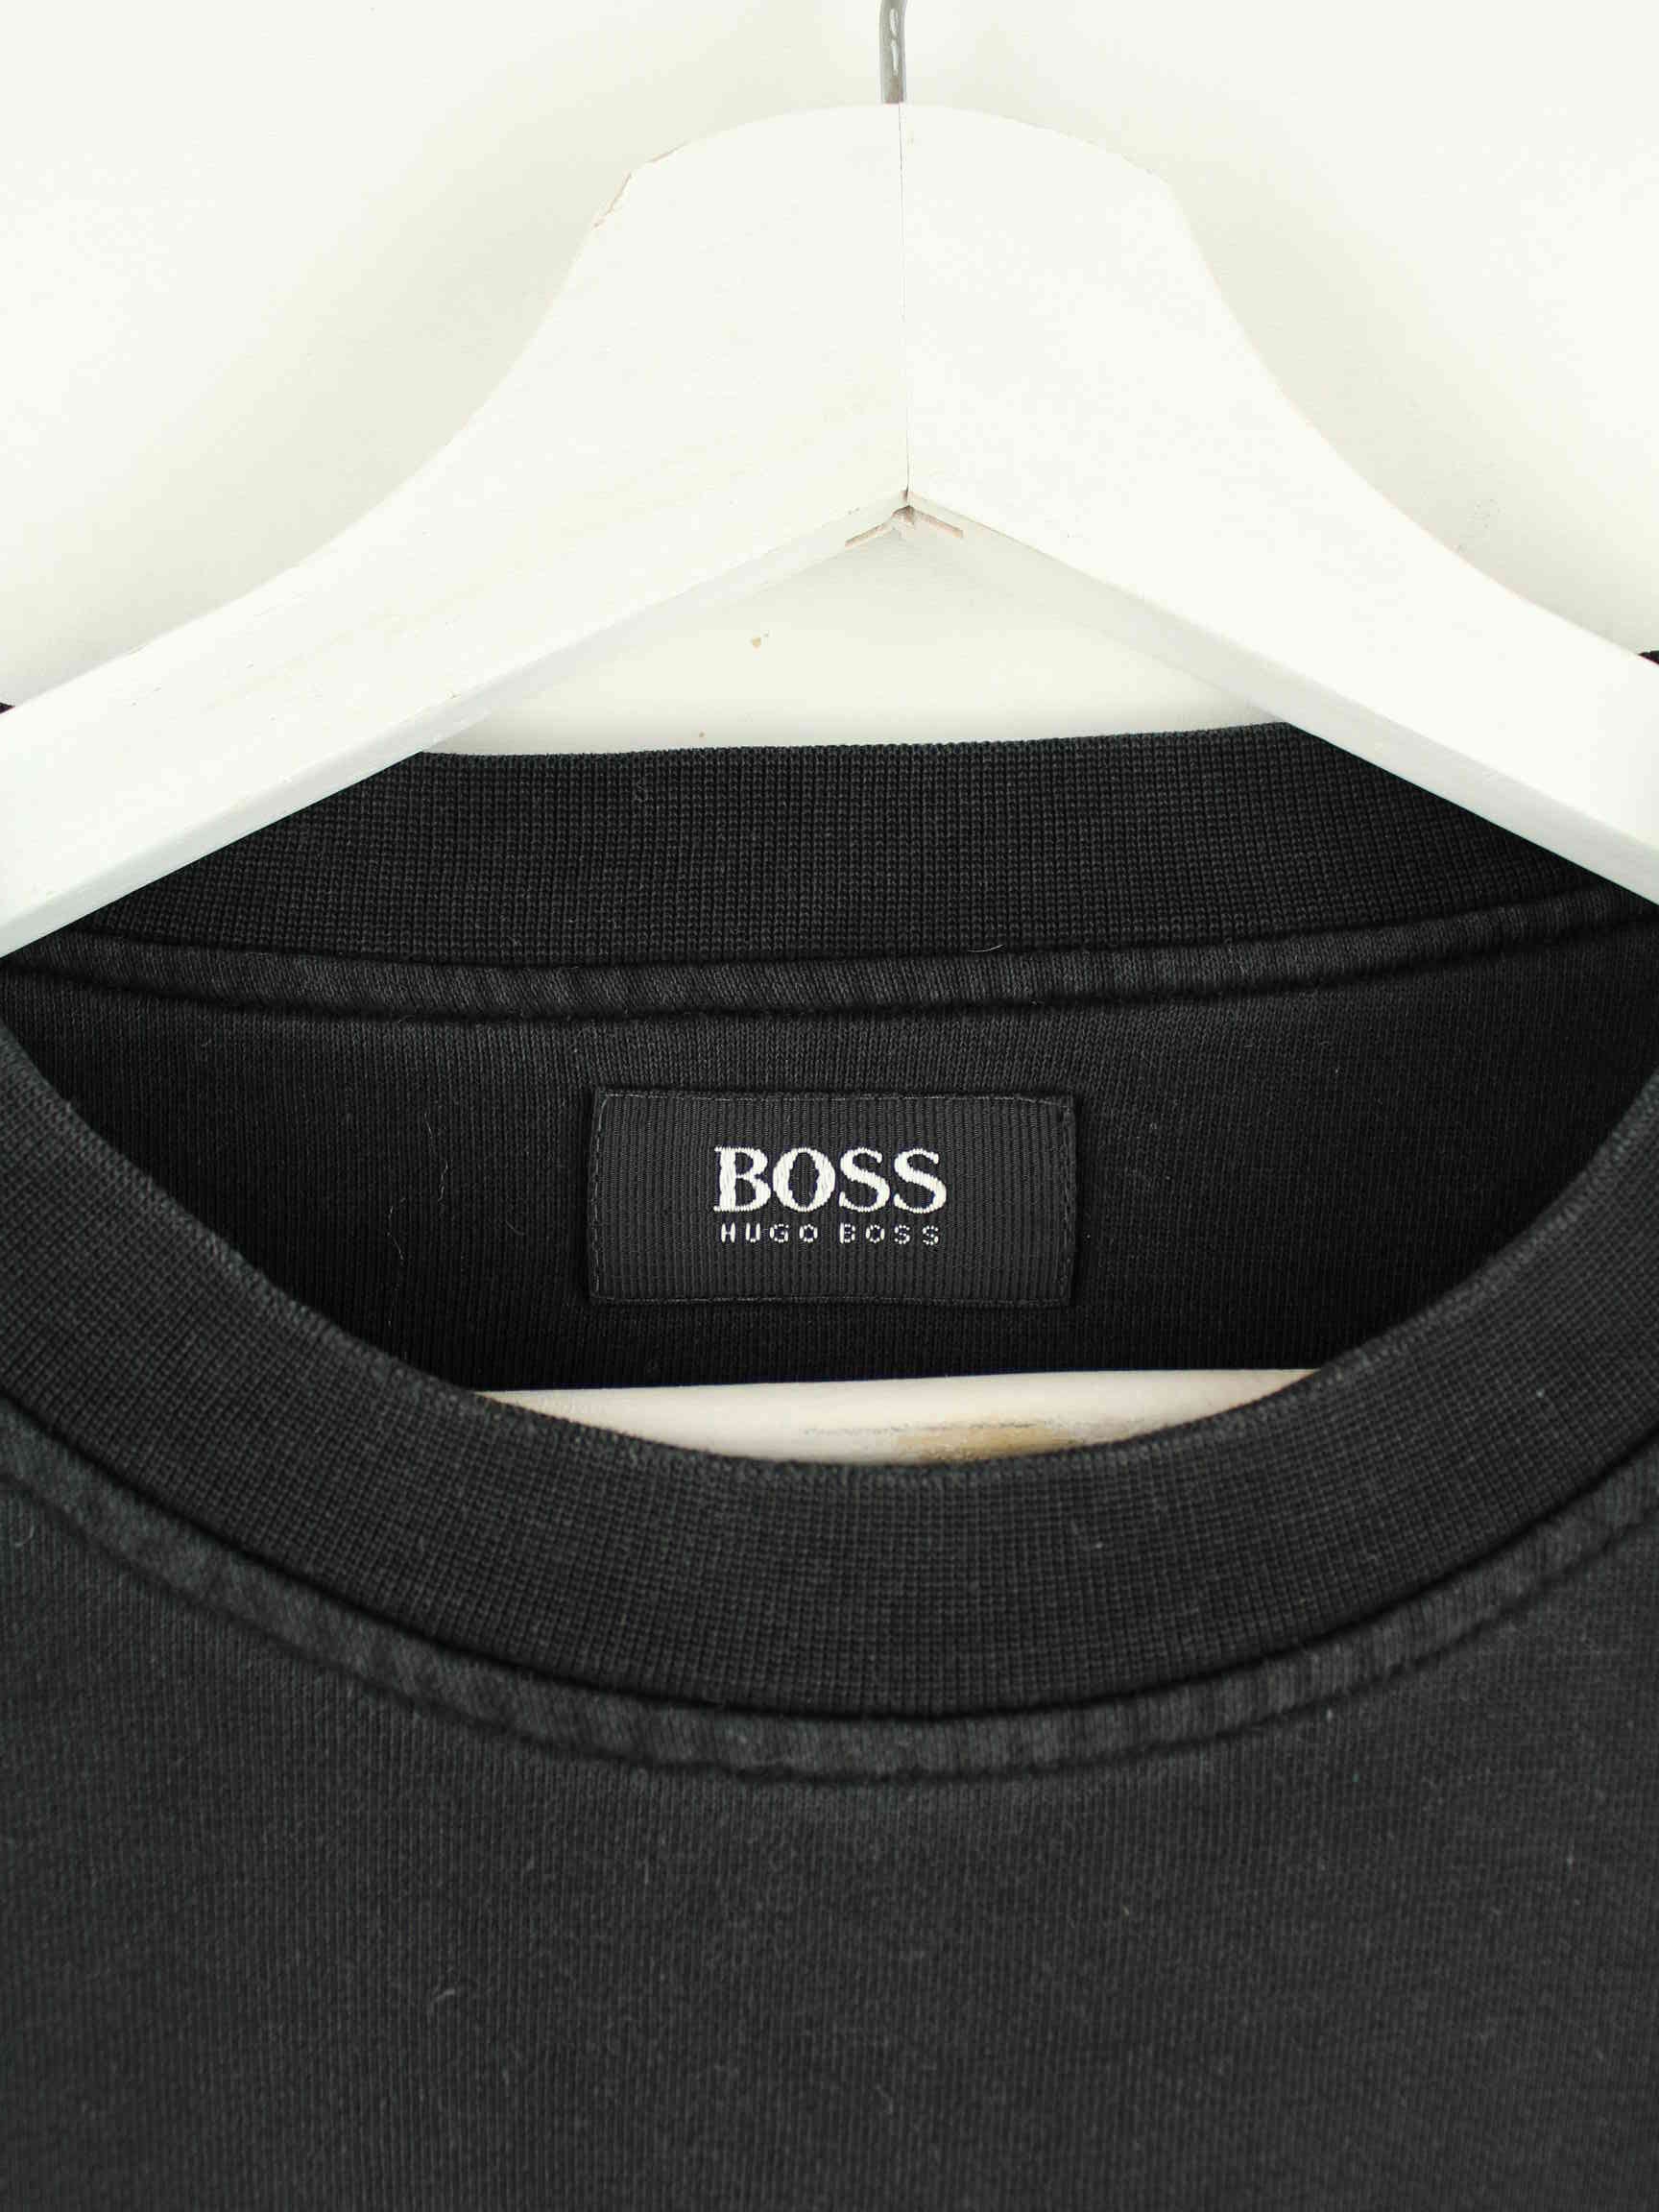 Hugo Boss Basic Sweater Schwarz XL (detail image 2)